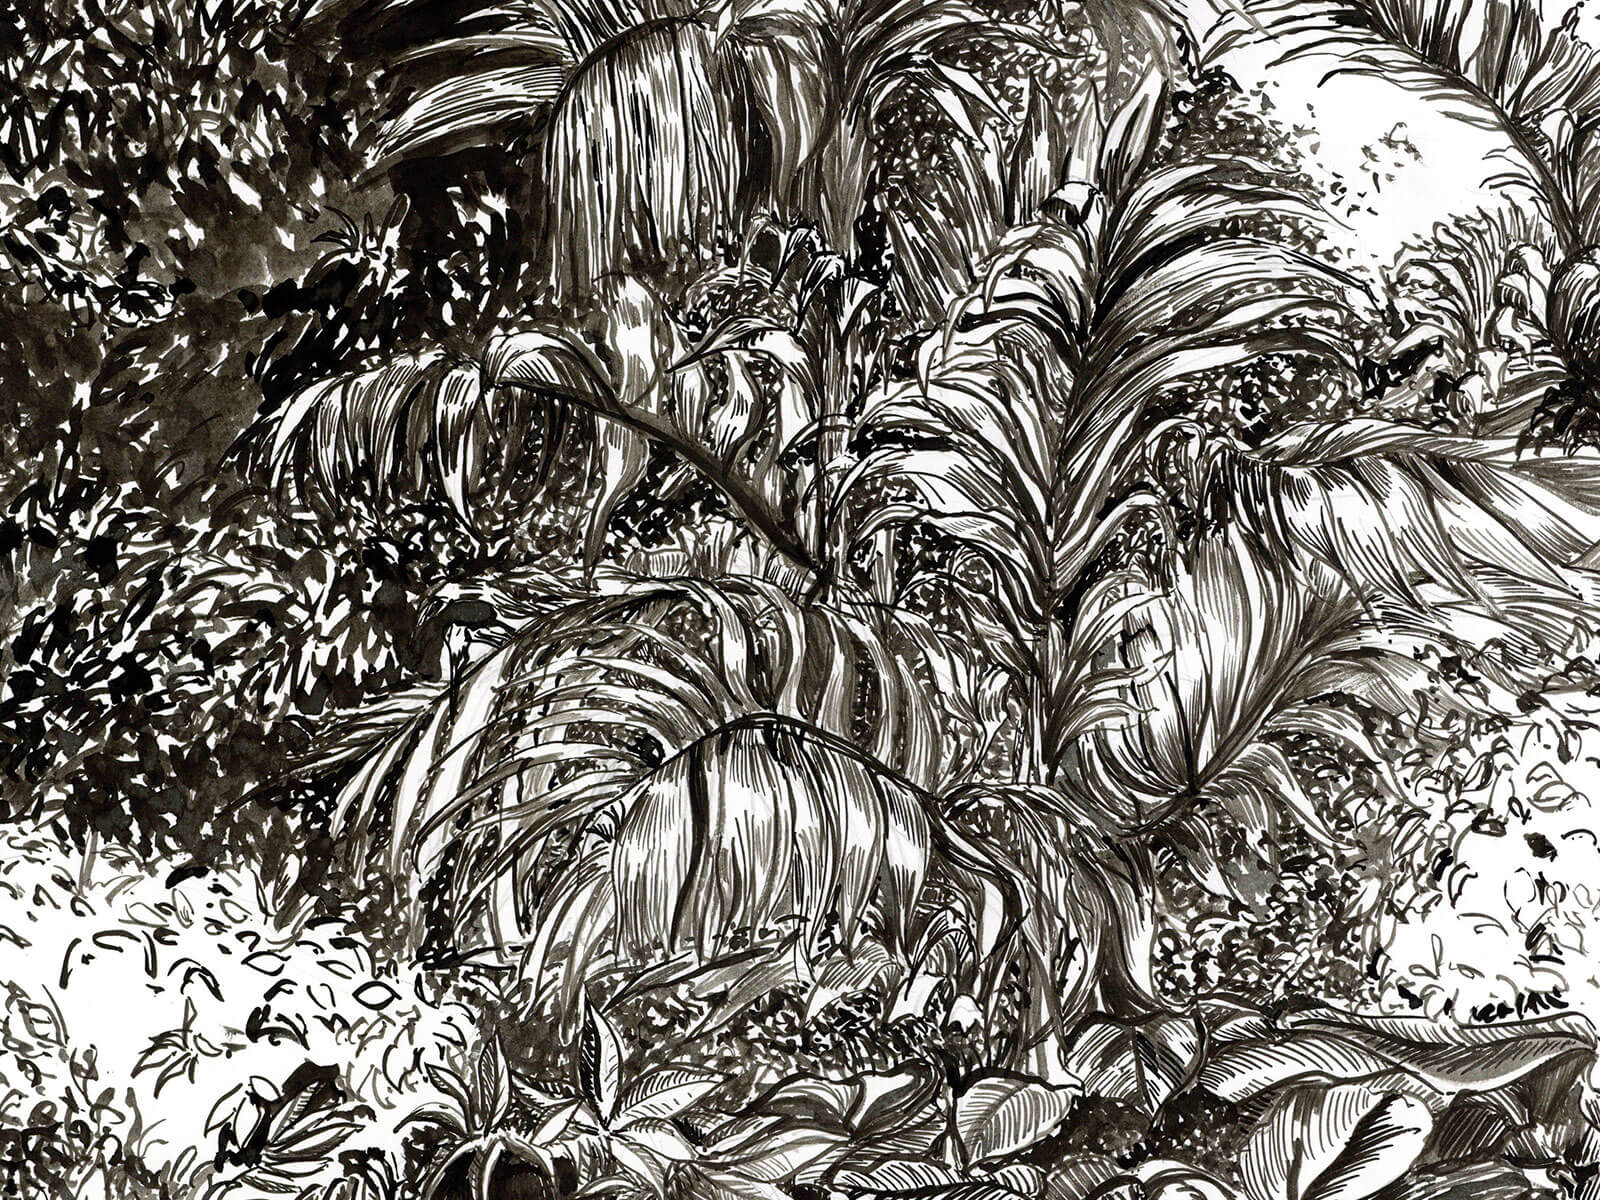 Black-and-white sketch of a fern in a jungle.